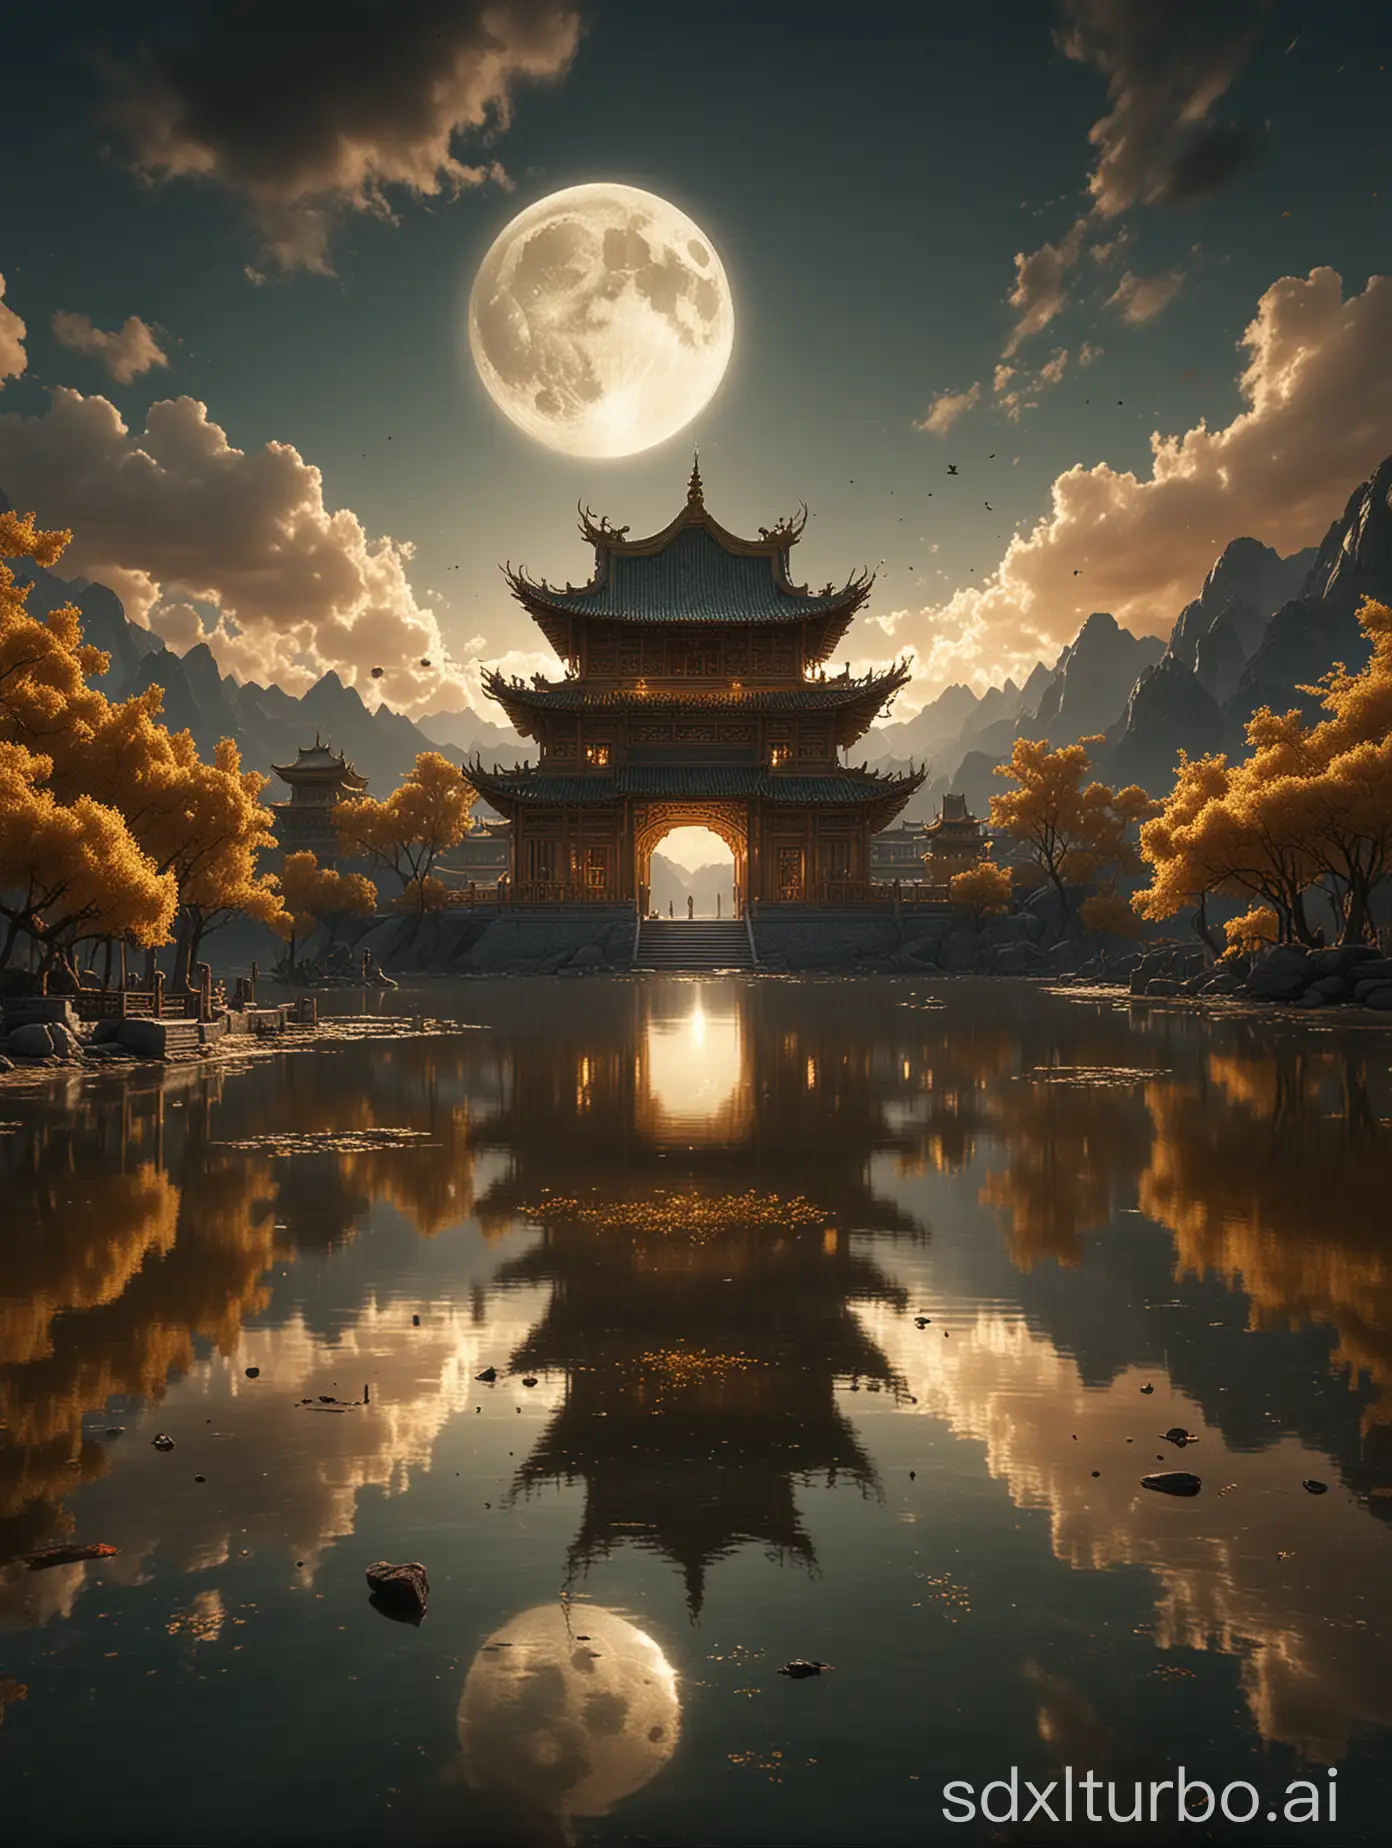 Golden-Palace-Illuminated-by-Moonlight-on-Calm-Lake